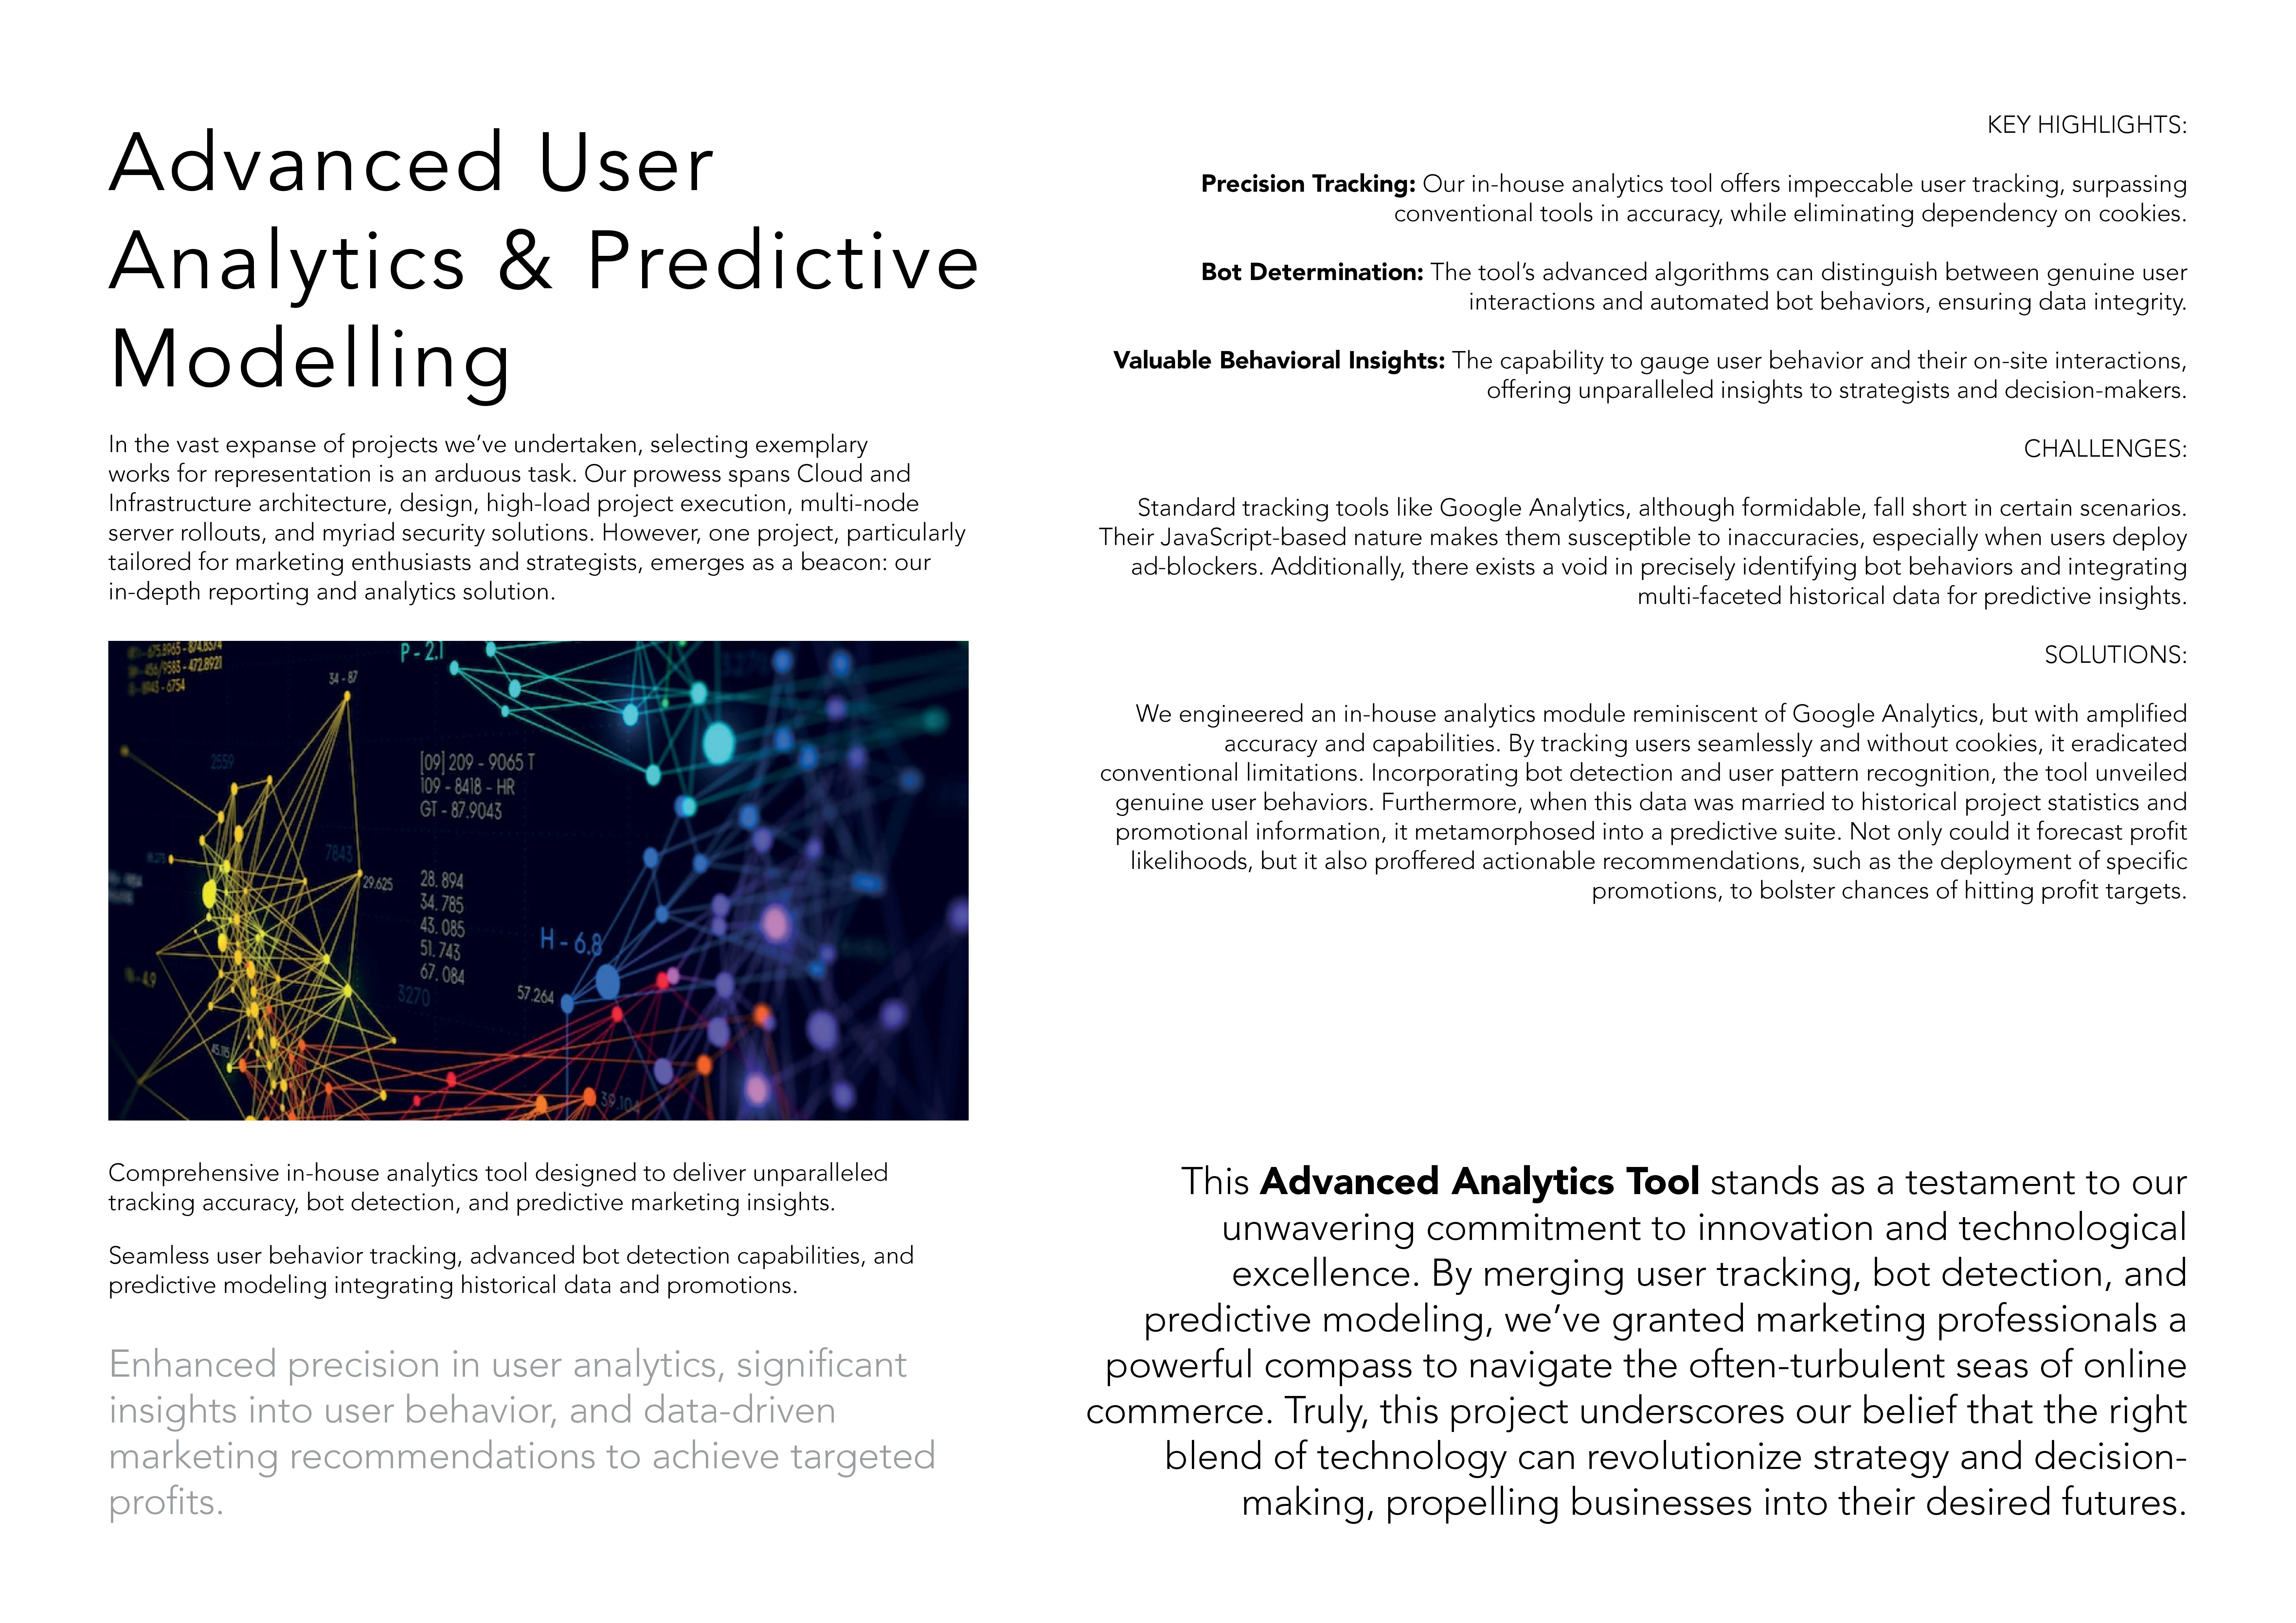 Advanced User Analytics & Predictive Modelling